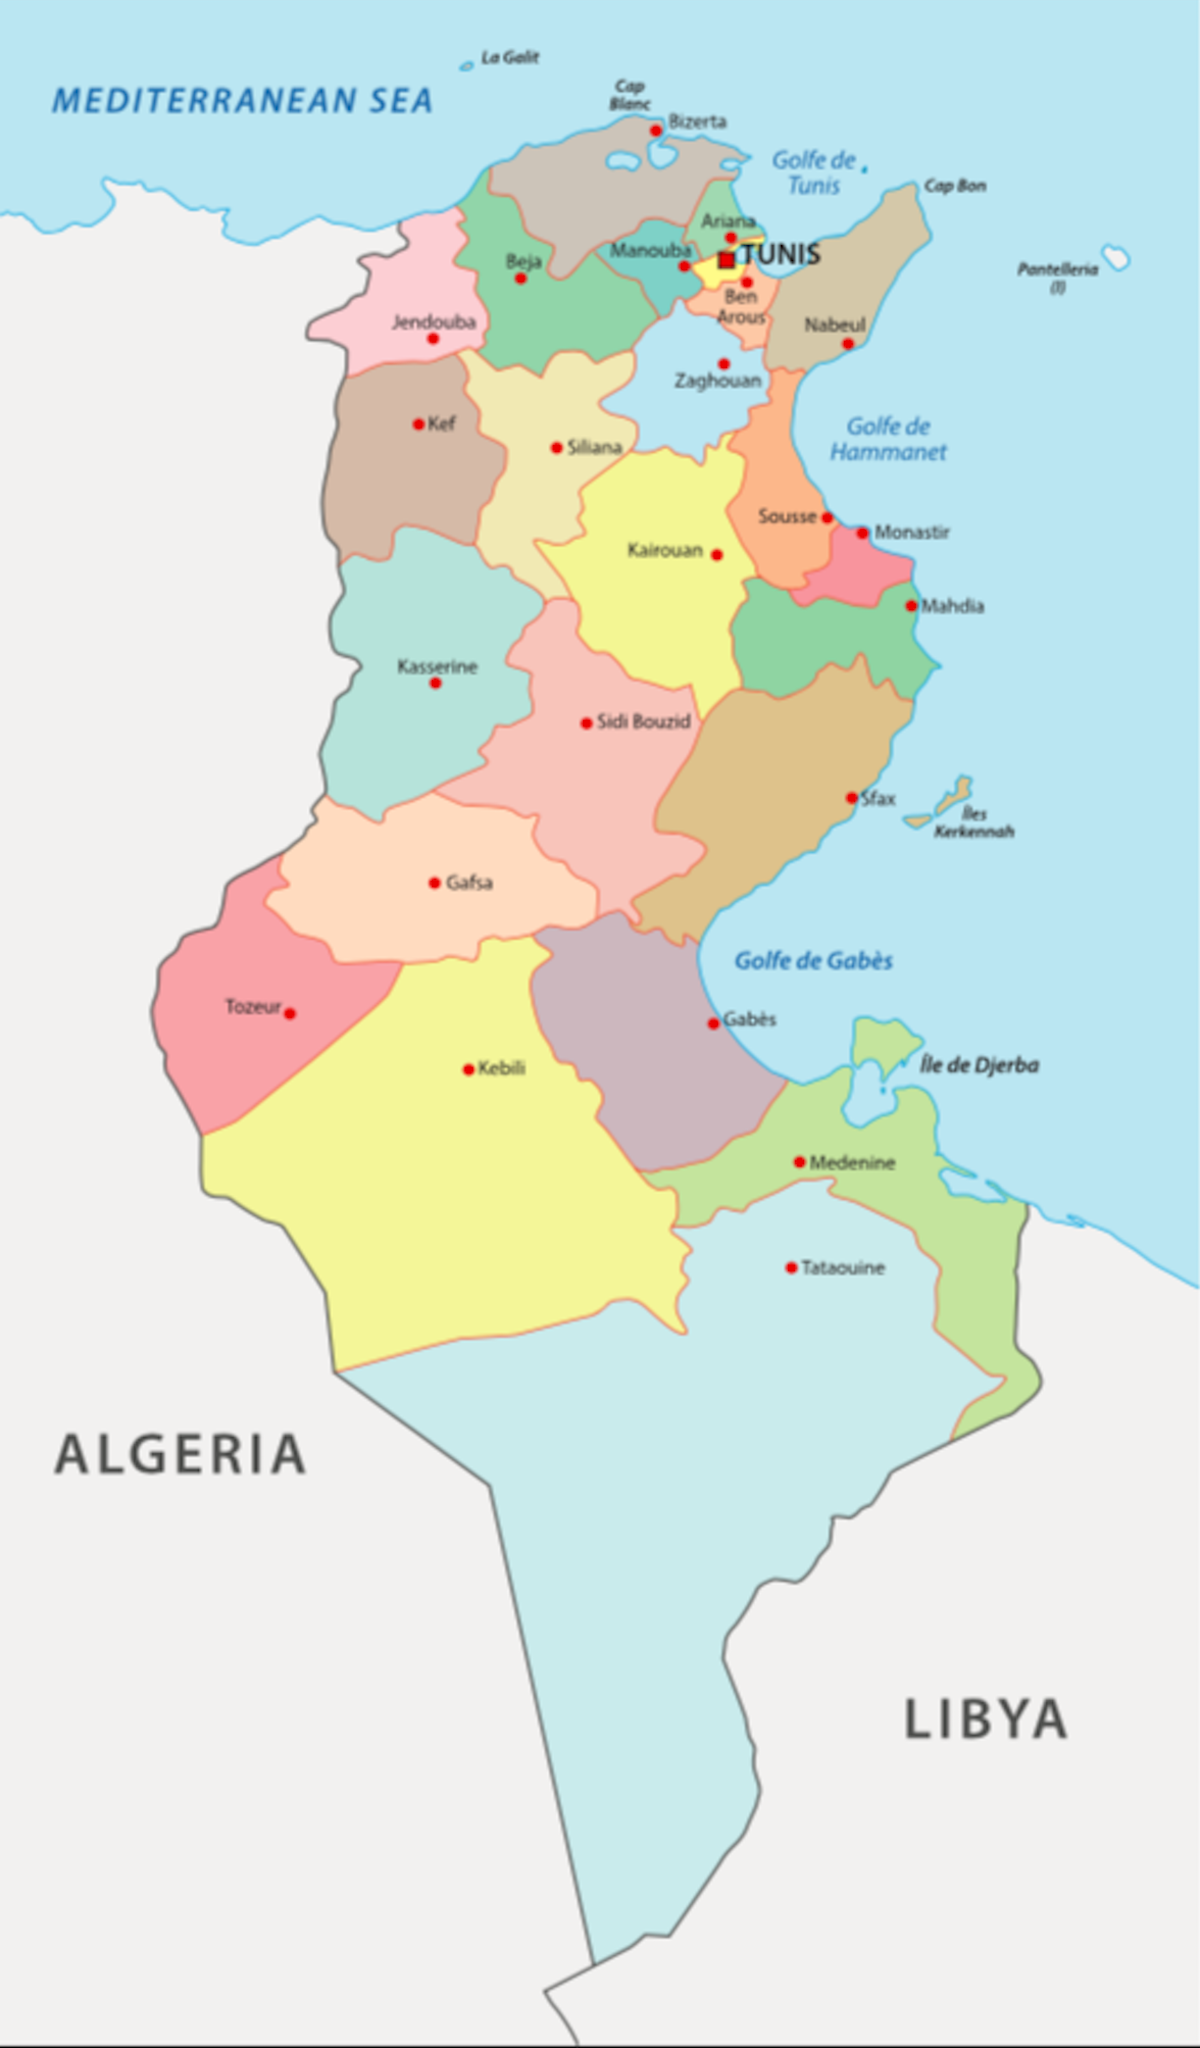 The Governorates of Tunisia